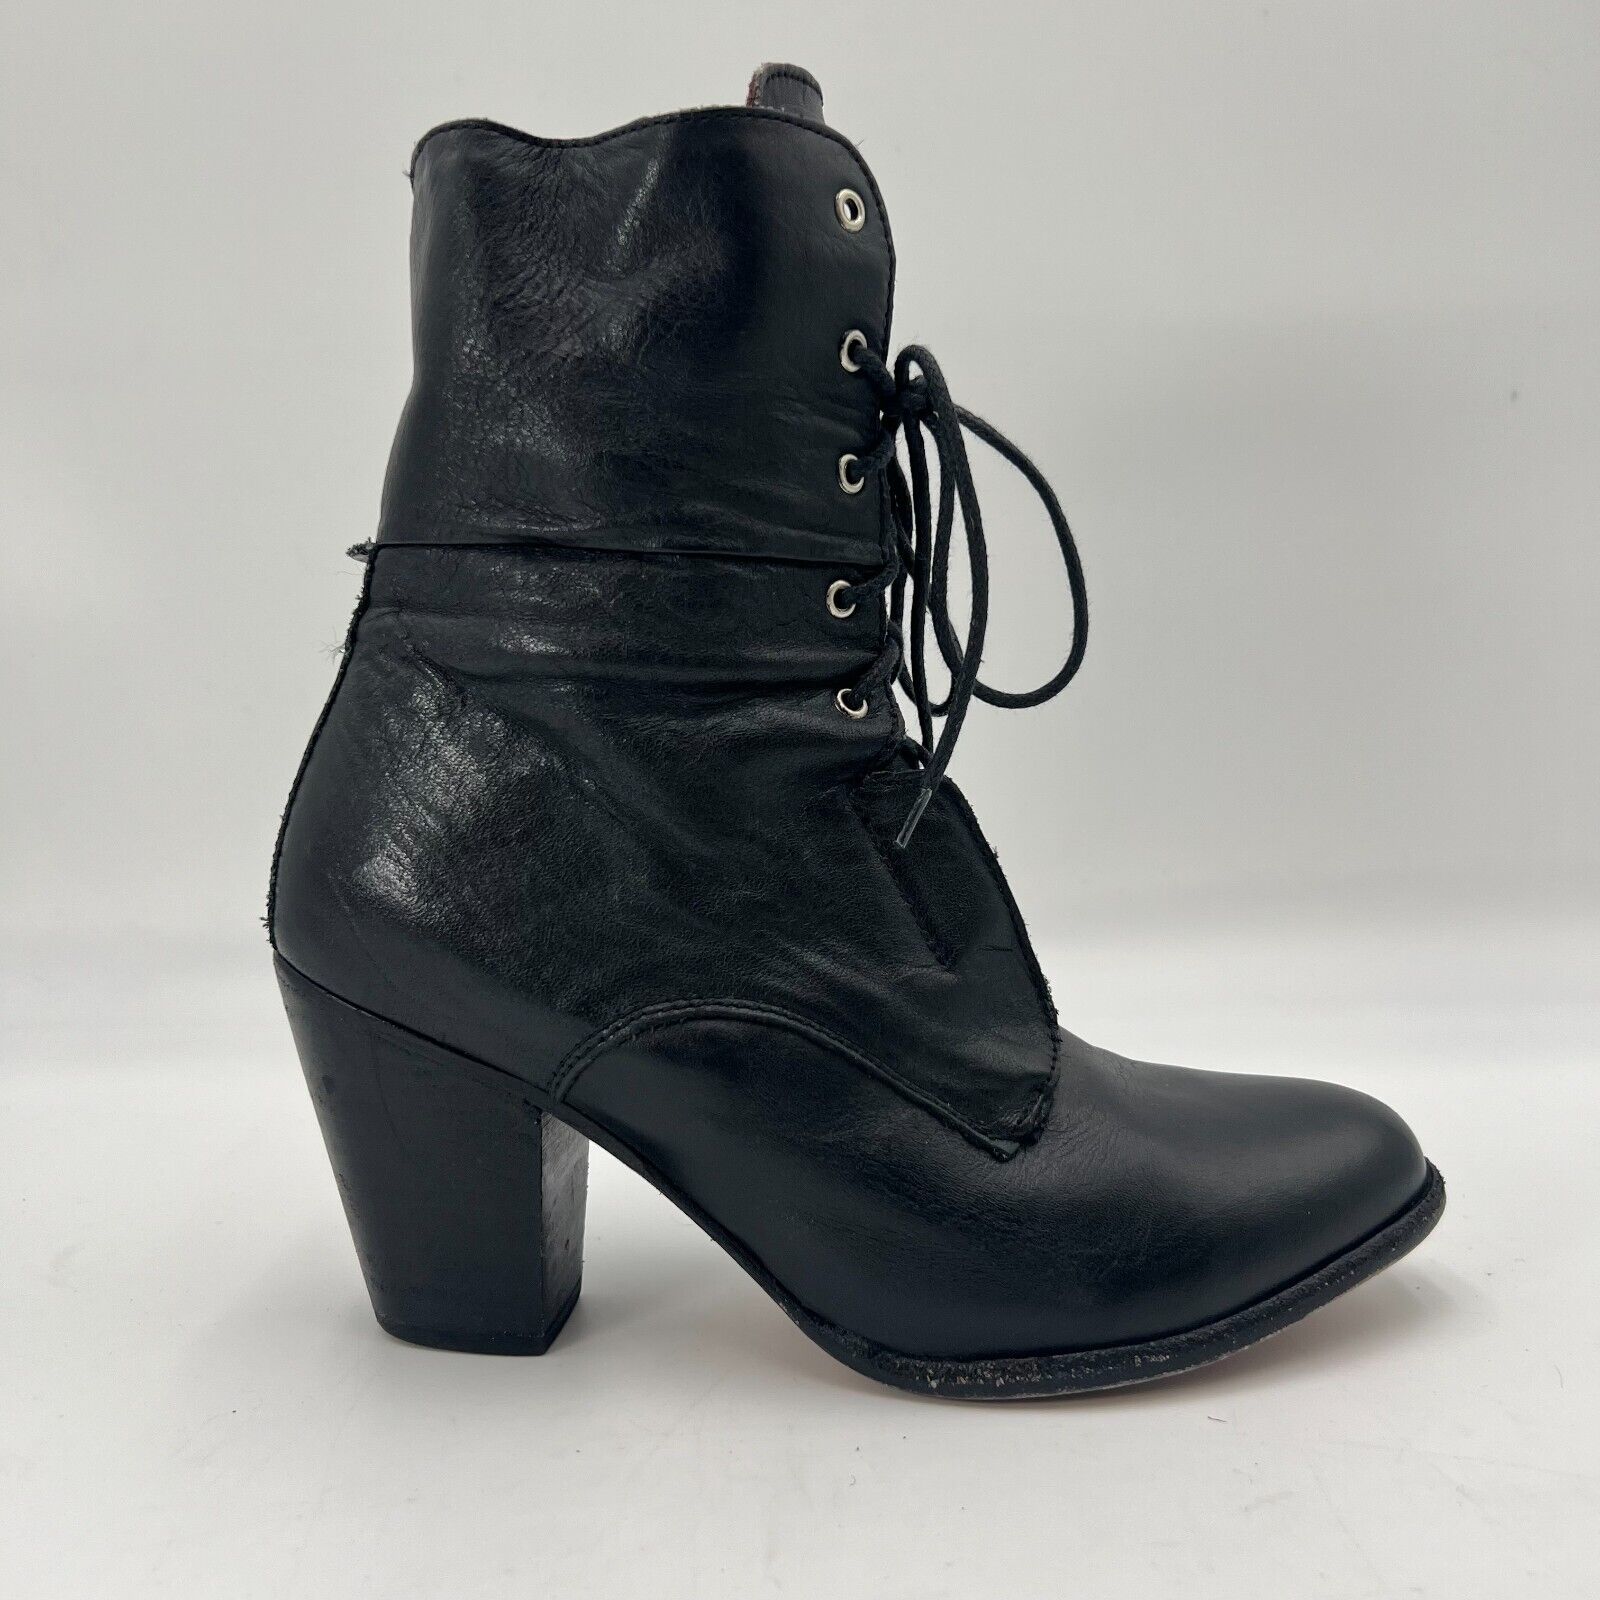 Zigi Soho Coraline Black Leather Lace Up Ankle Boots 3 inch Heel Womens Size 8M